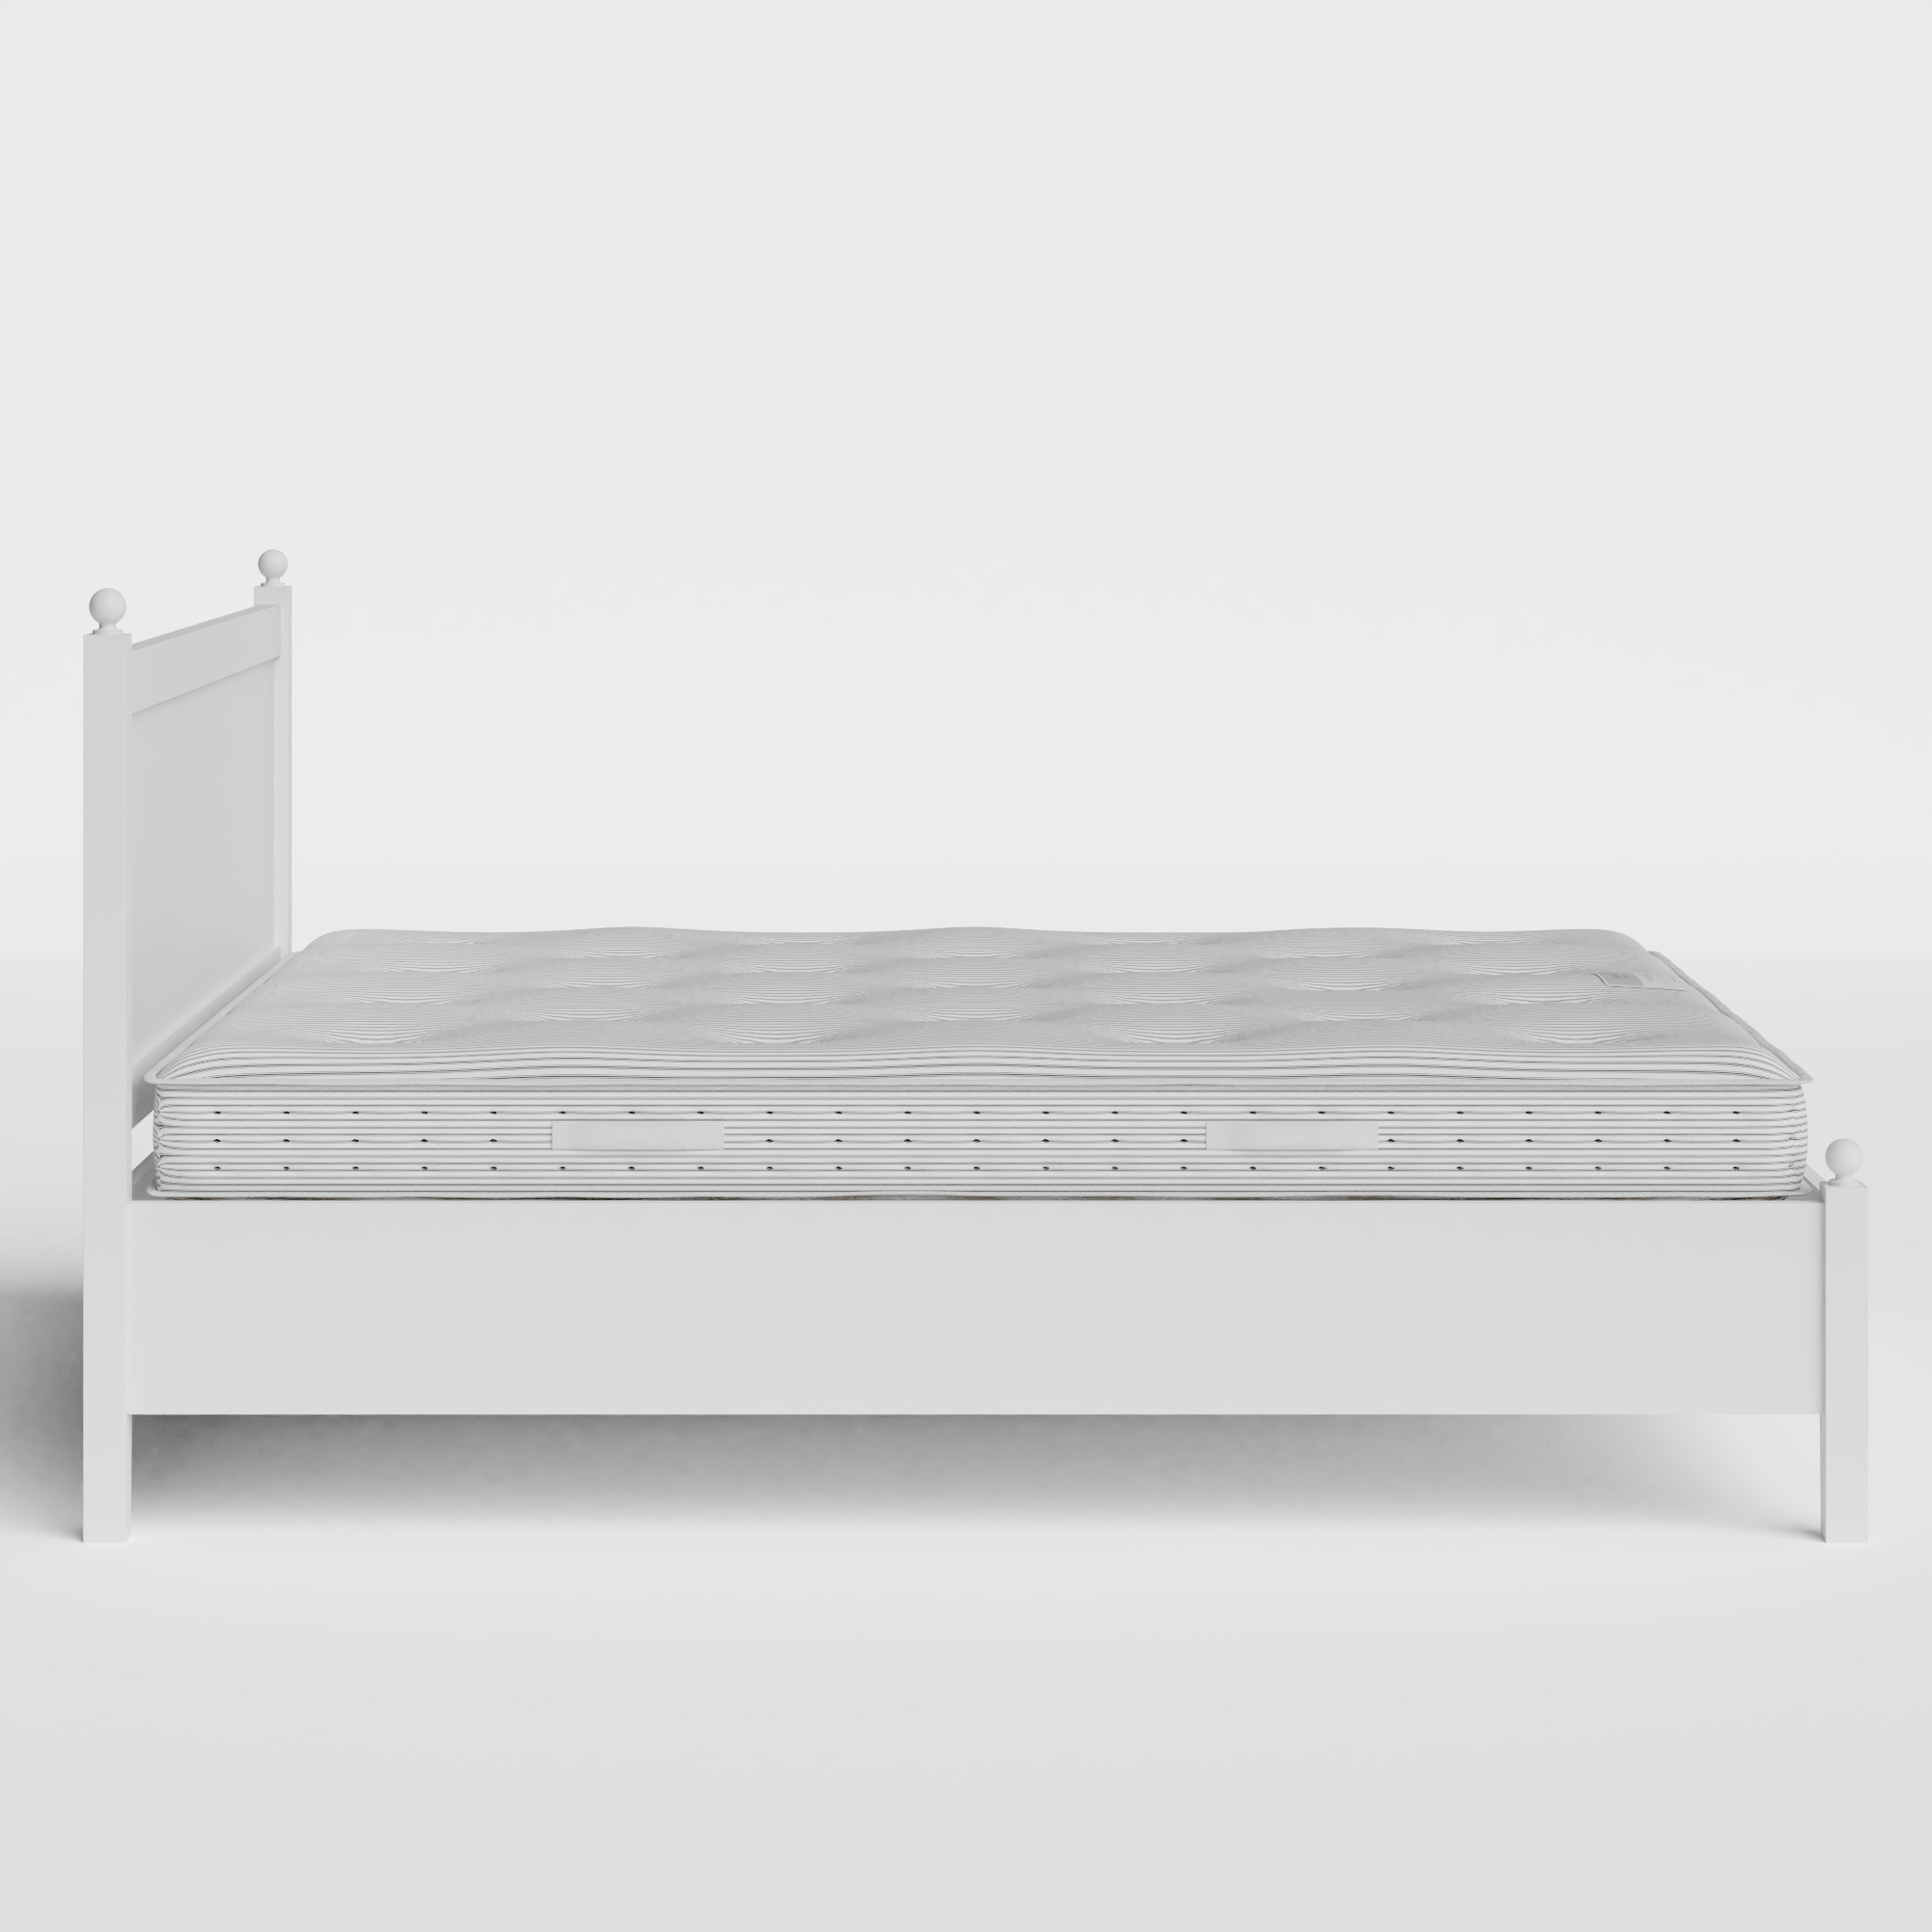 Marbella Low Footend Painted lit en bois peint en blanc avec matelas